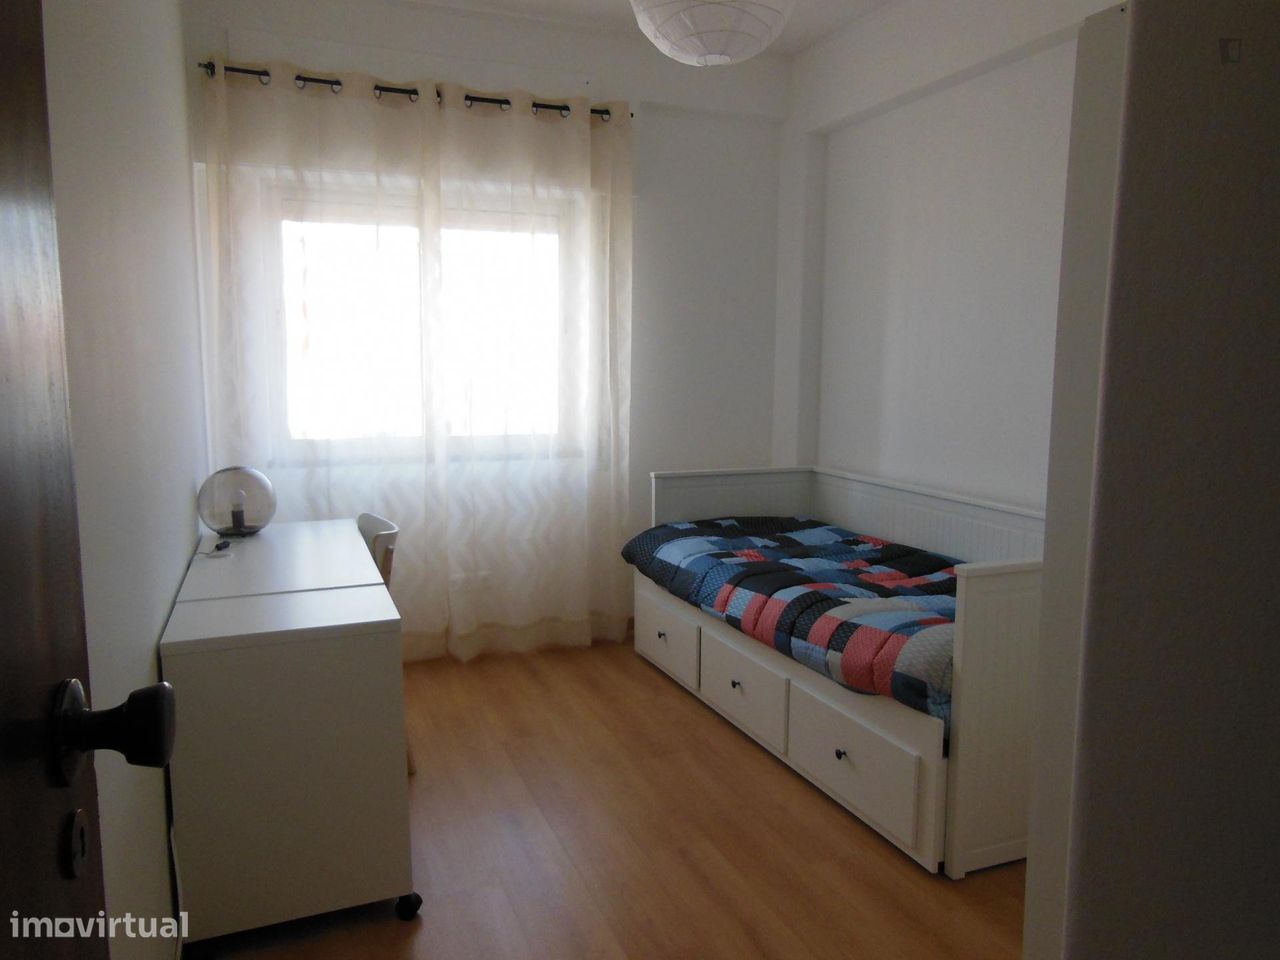 430526 - Single bedroom in a three-bedroom...